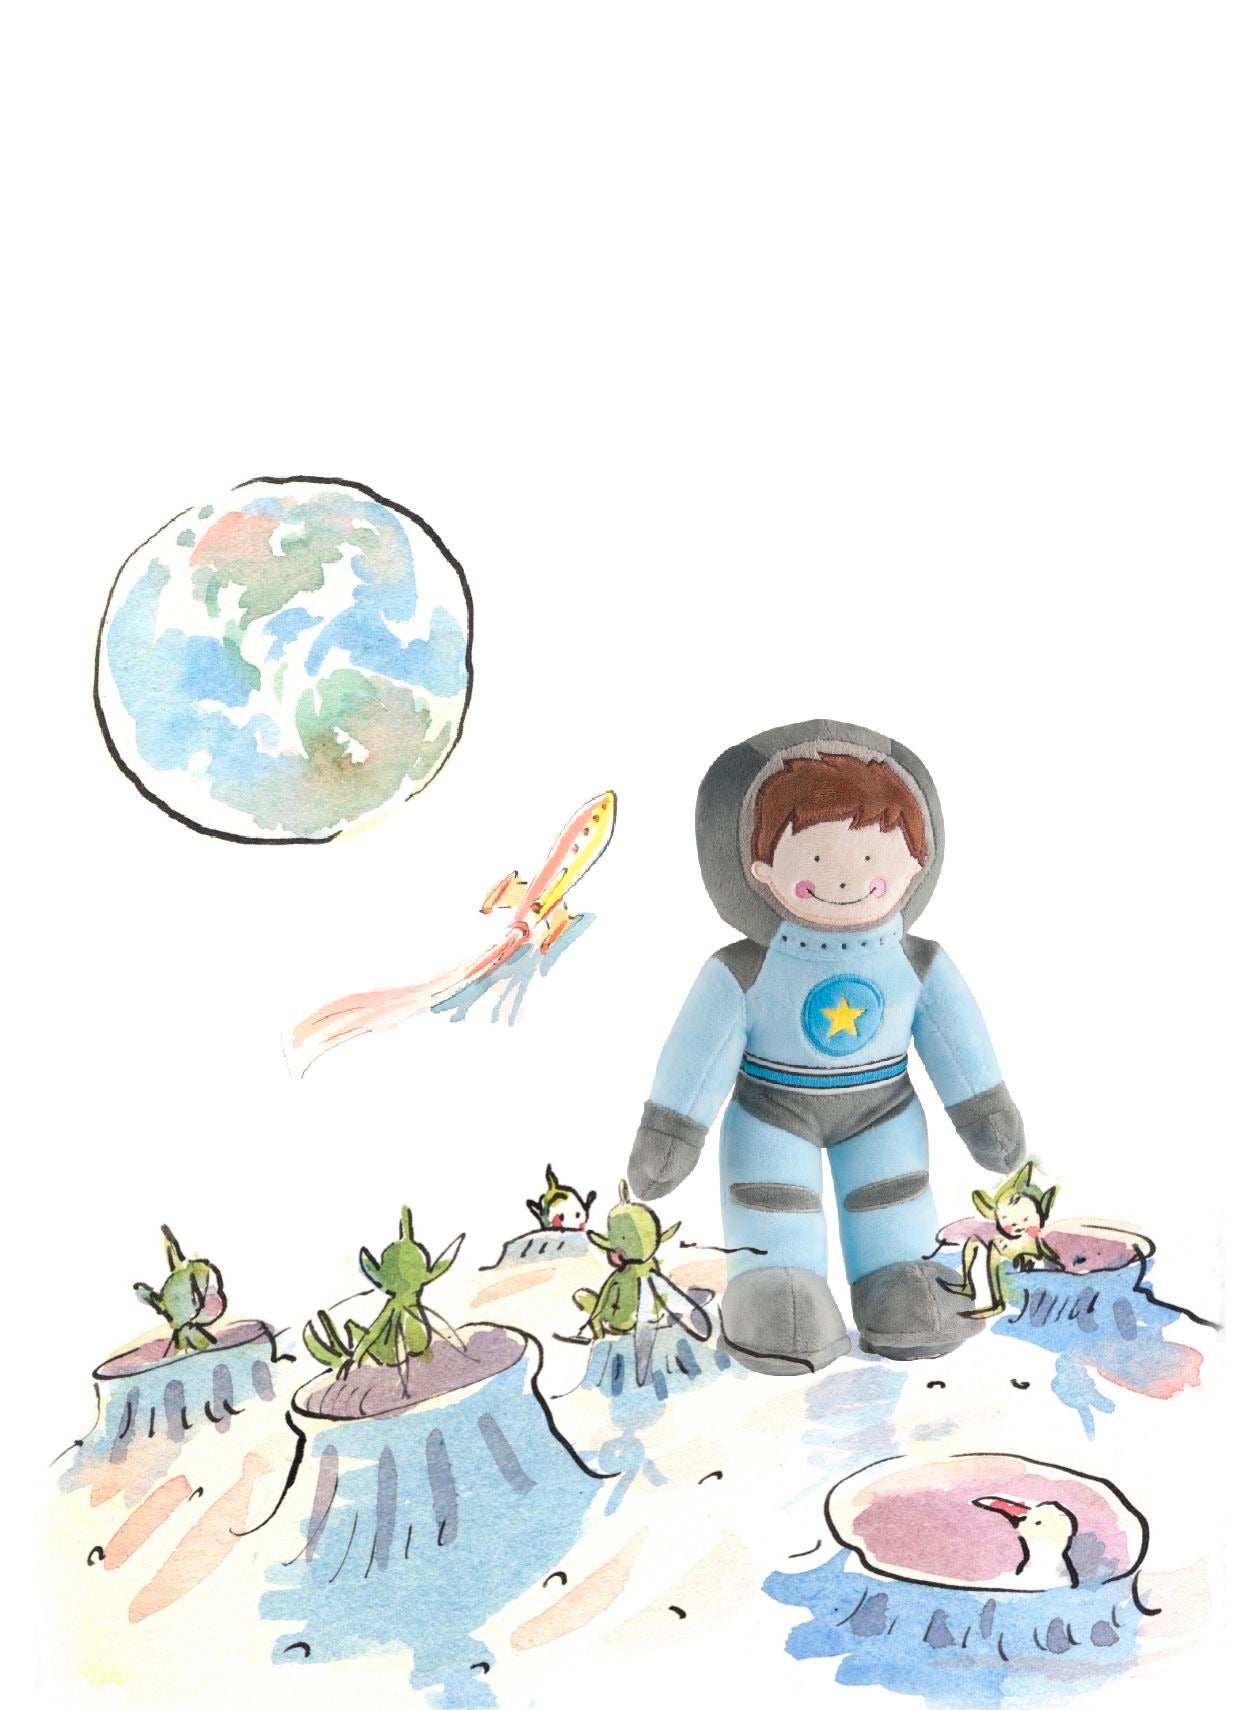 Astronaut, space nursery, space, space toys, astronaut doll, spaceman soft toy, astronaut plush, space nursery decor, space theme bedroom, space themed nursery